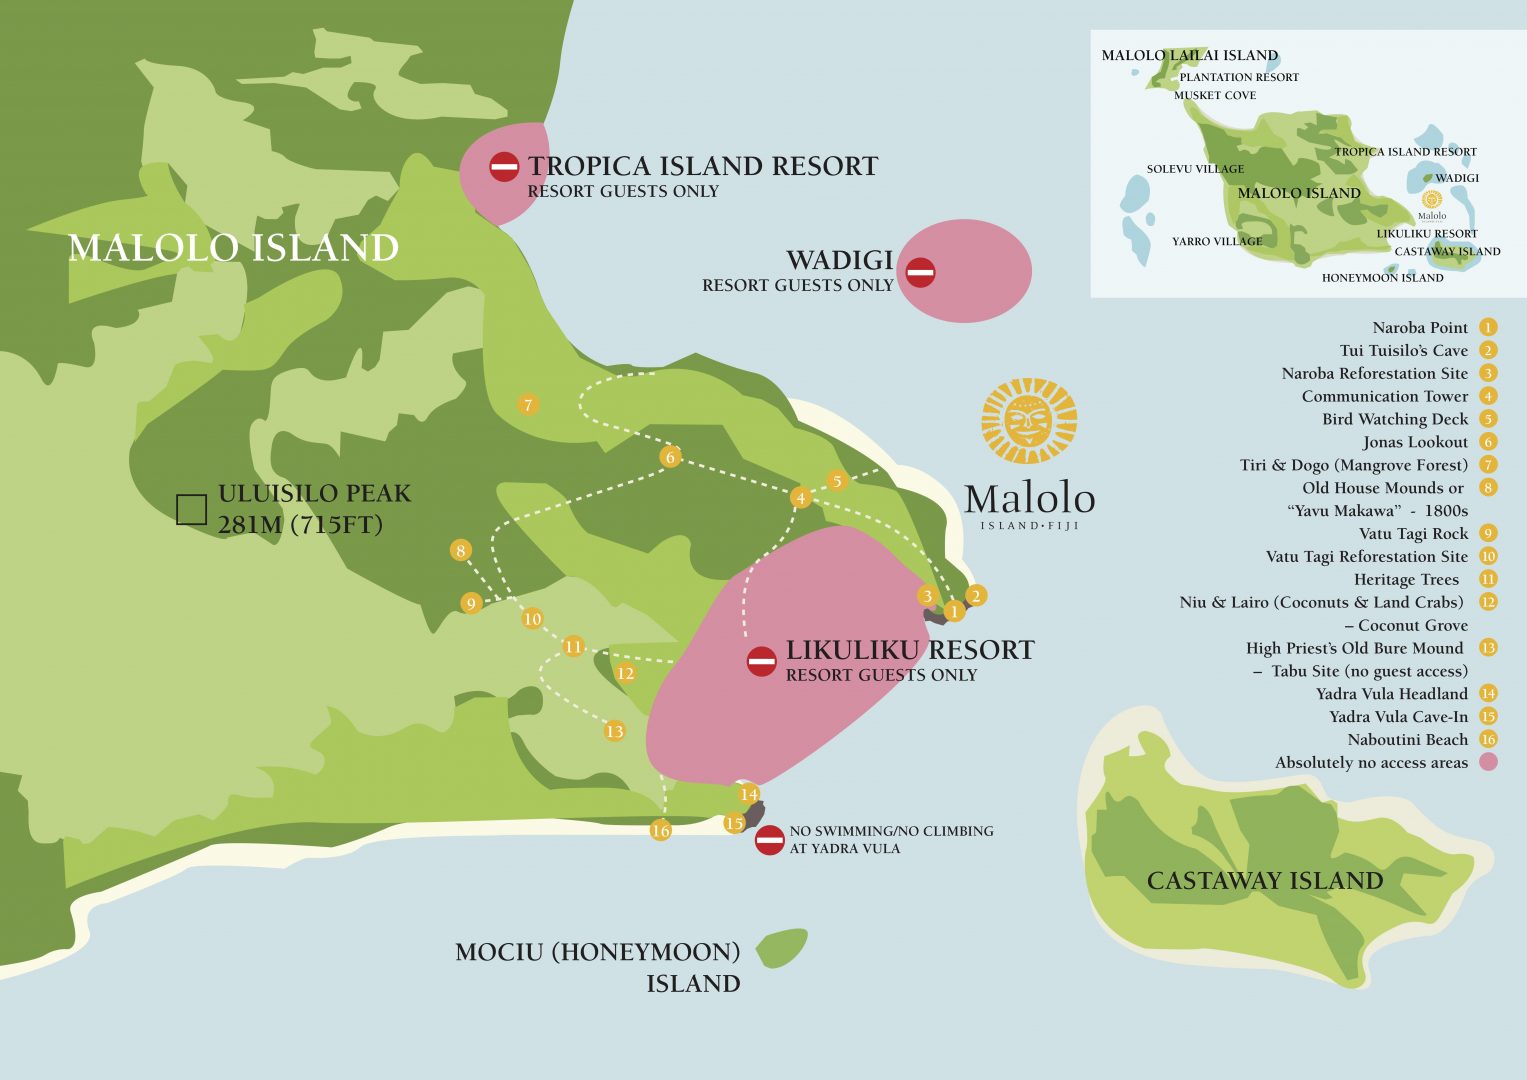 Castaway island map